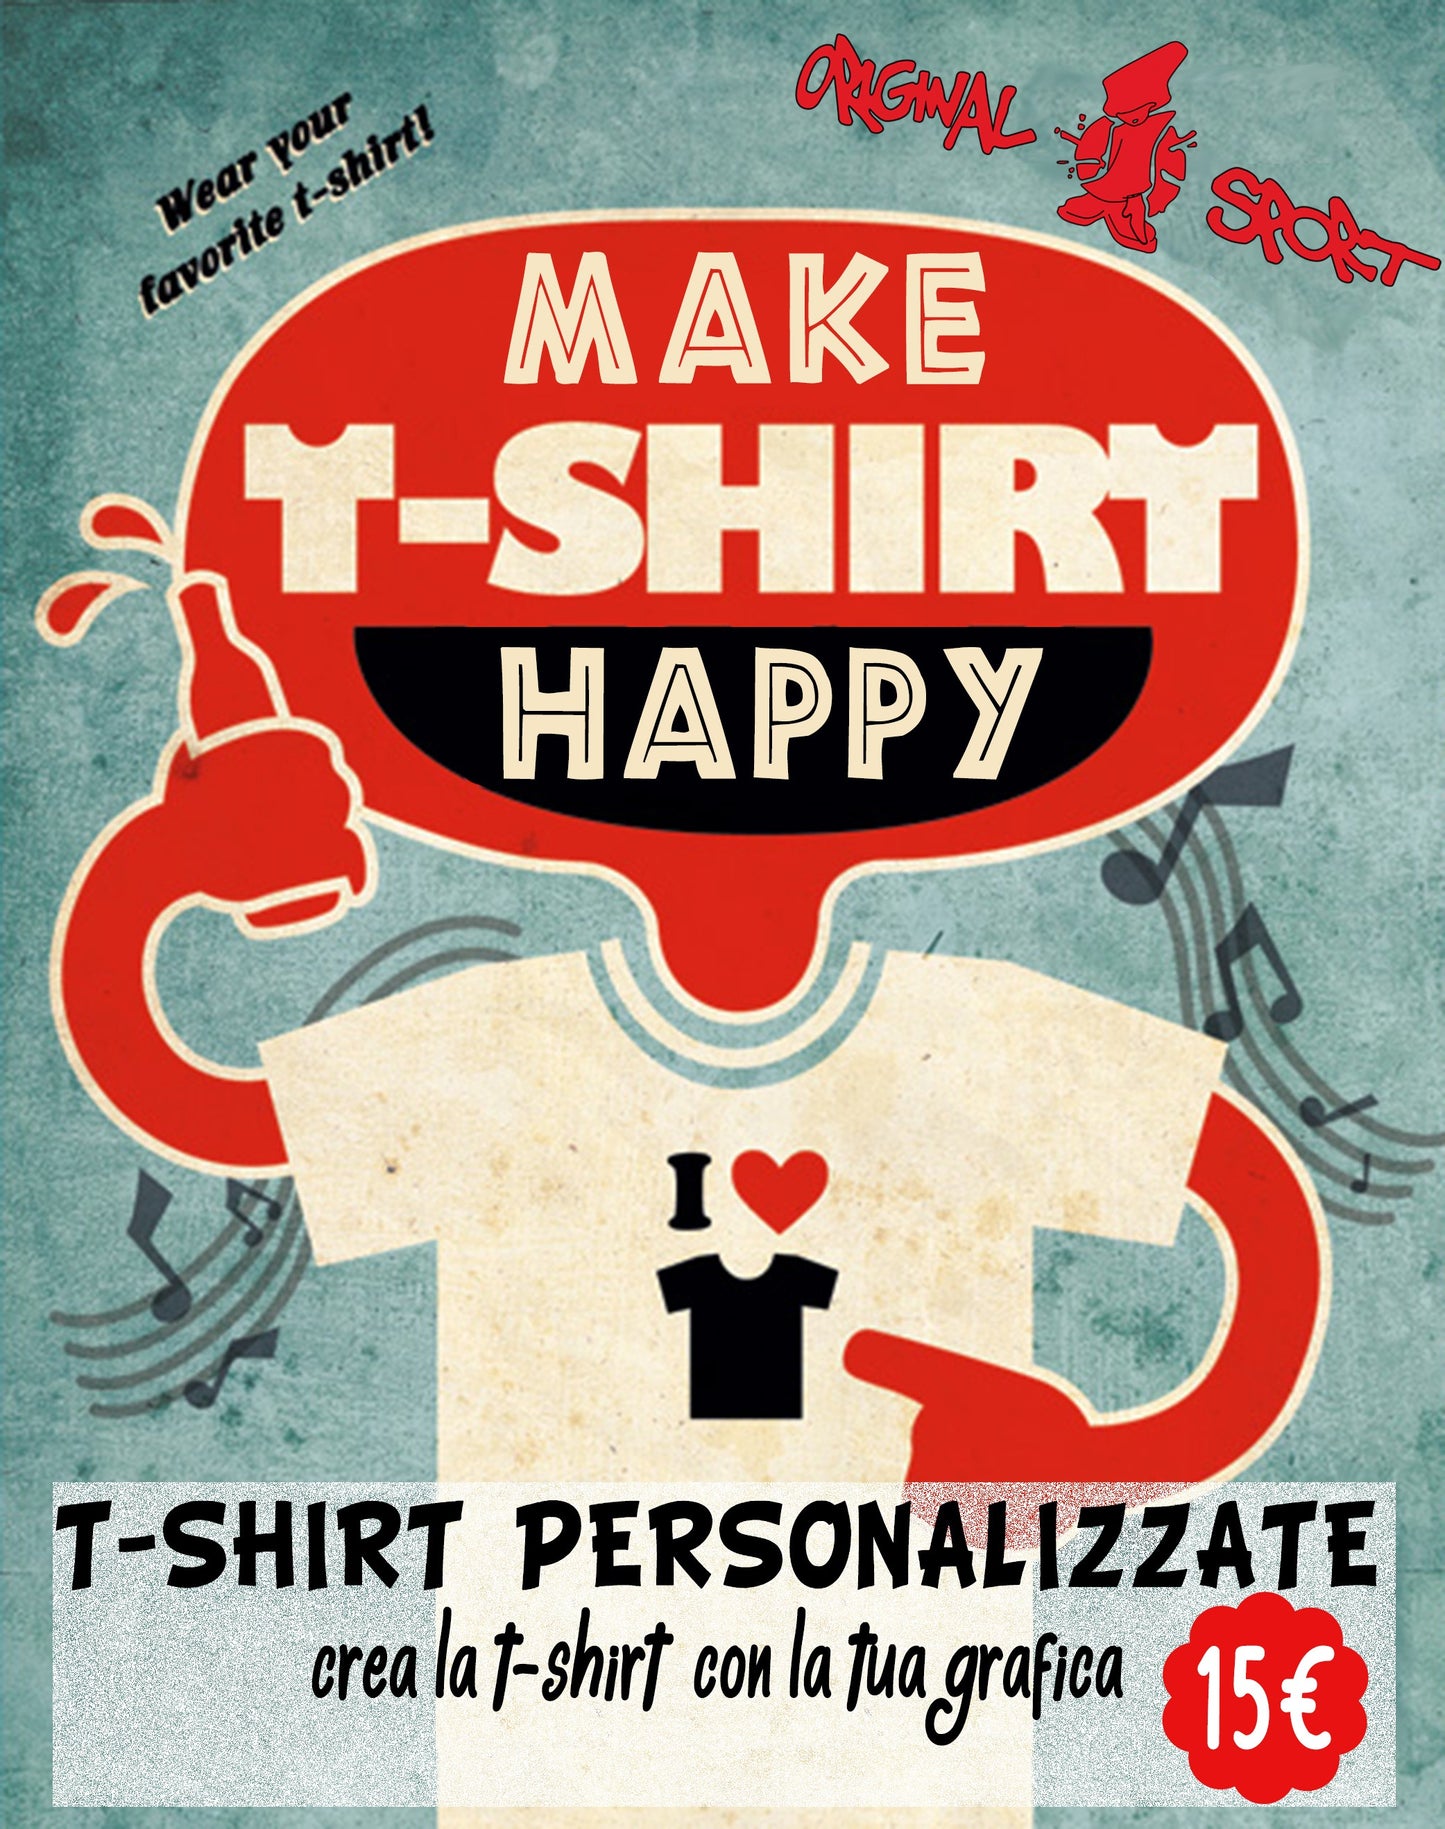 T-shirt personalizzata - Original Sport